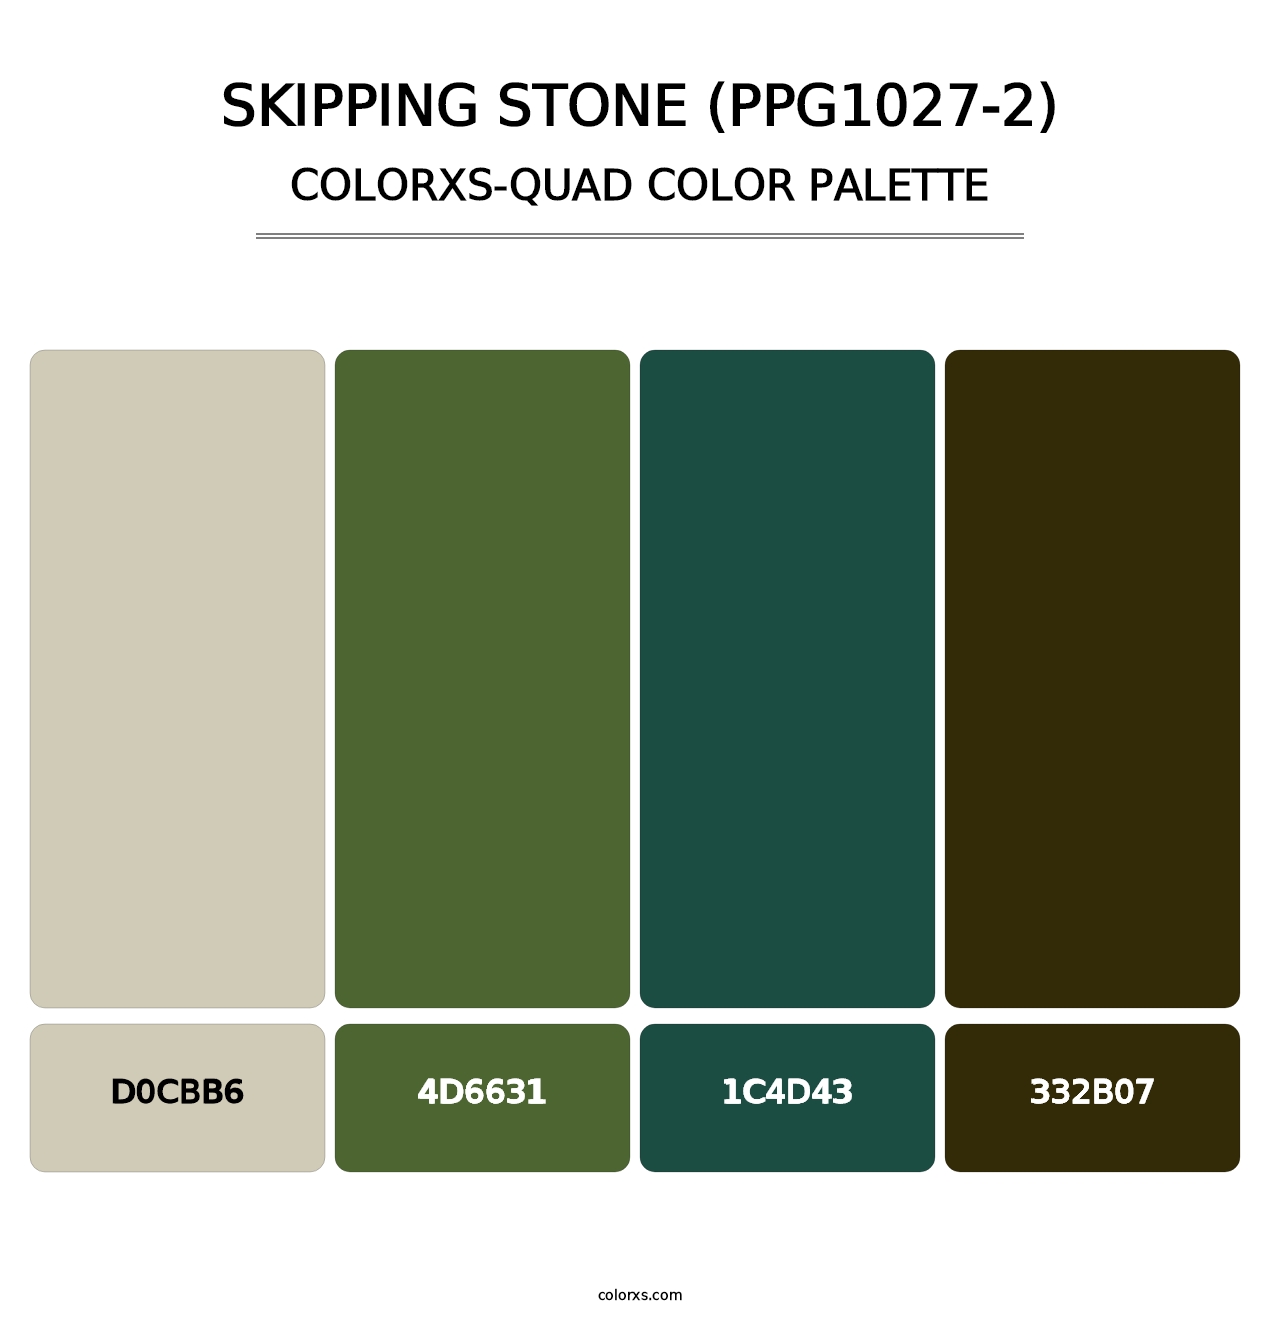 Skipping Stone (PPG1027-2) - Colorxs Quad Palette